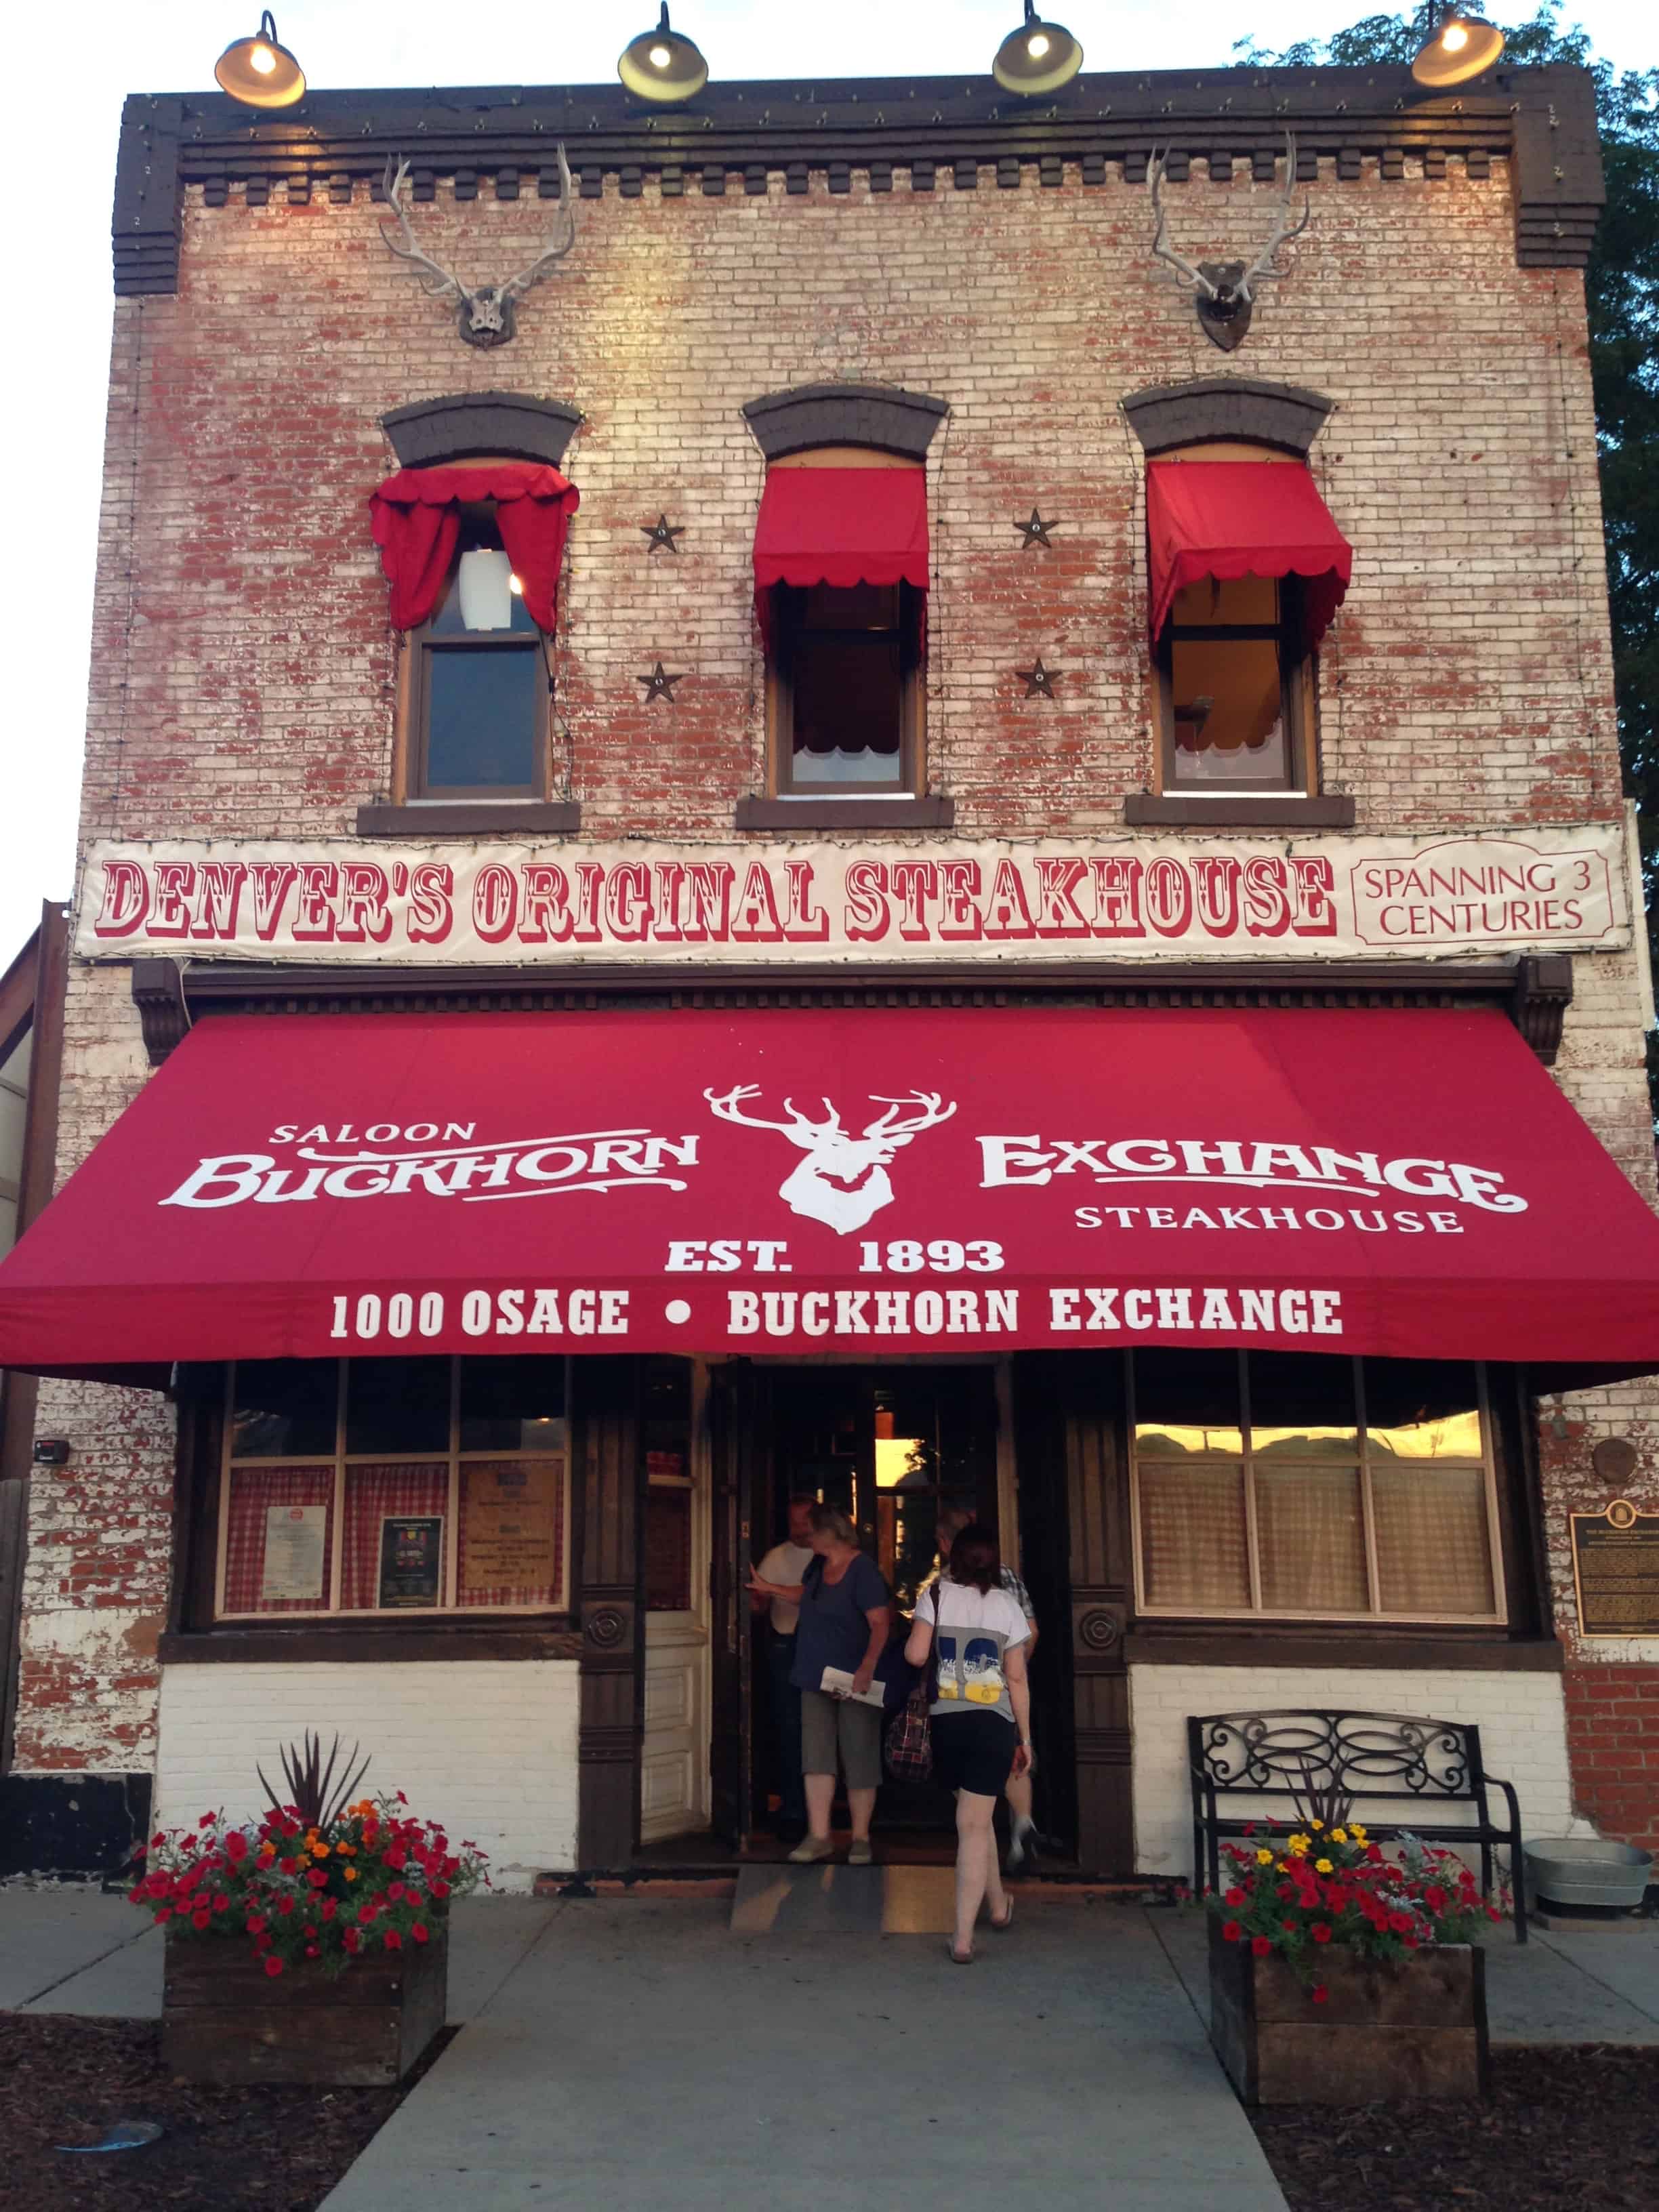 Buckhorn Exchange in Denver, Colorado